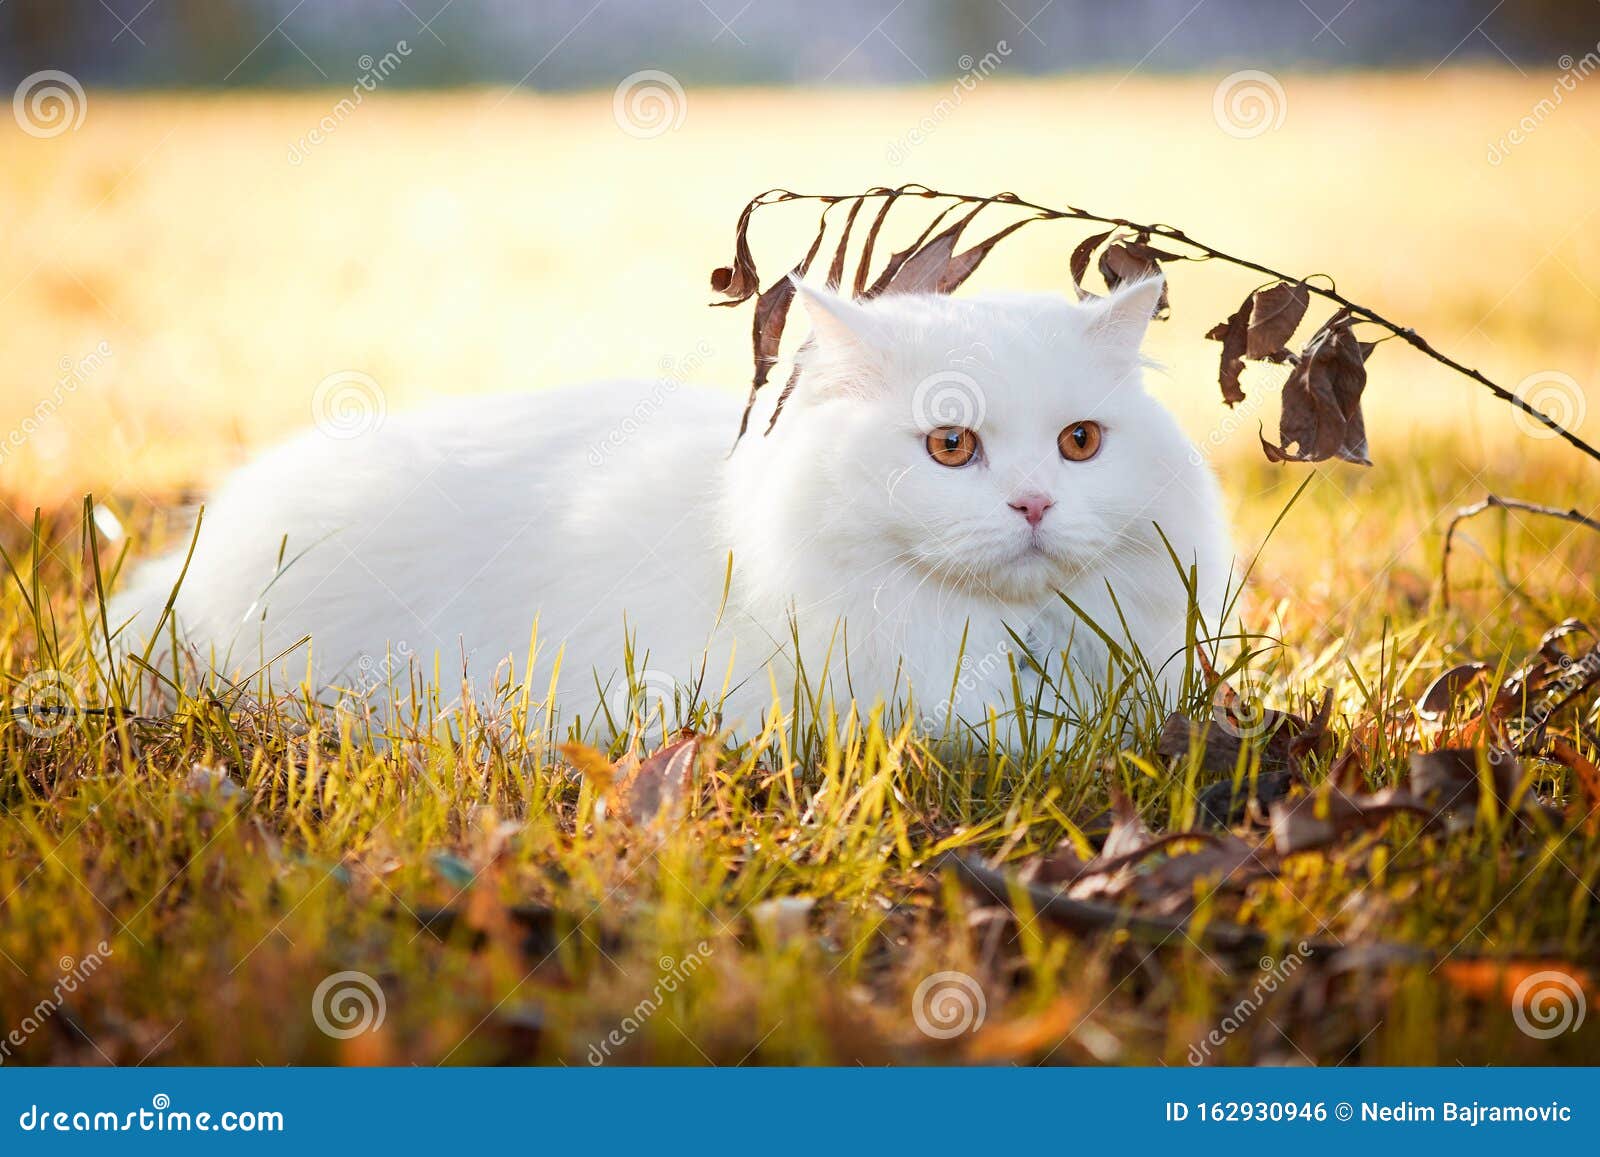 beautiful turkish angora cat